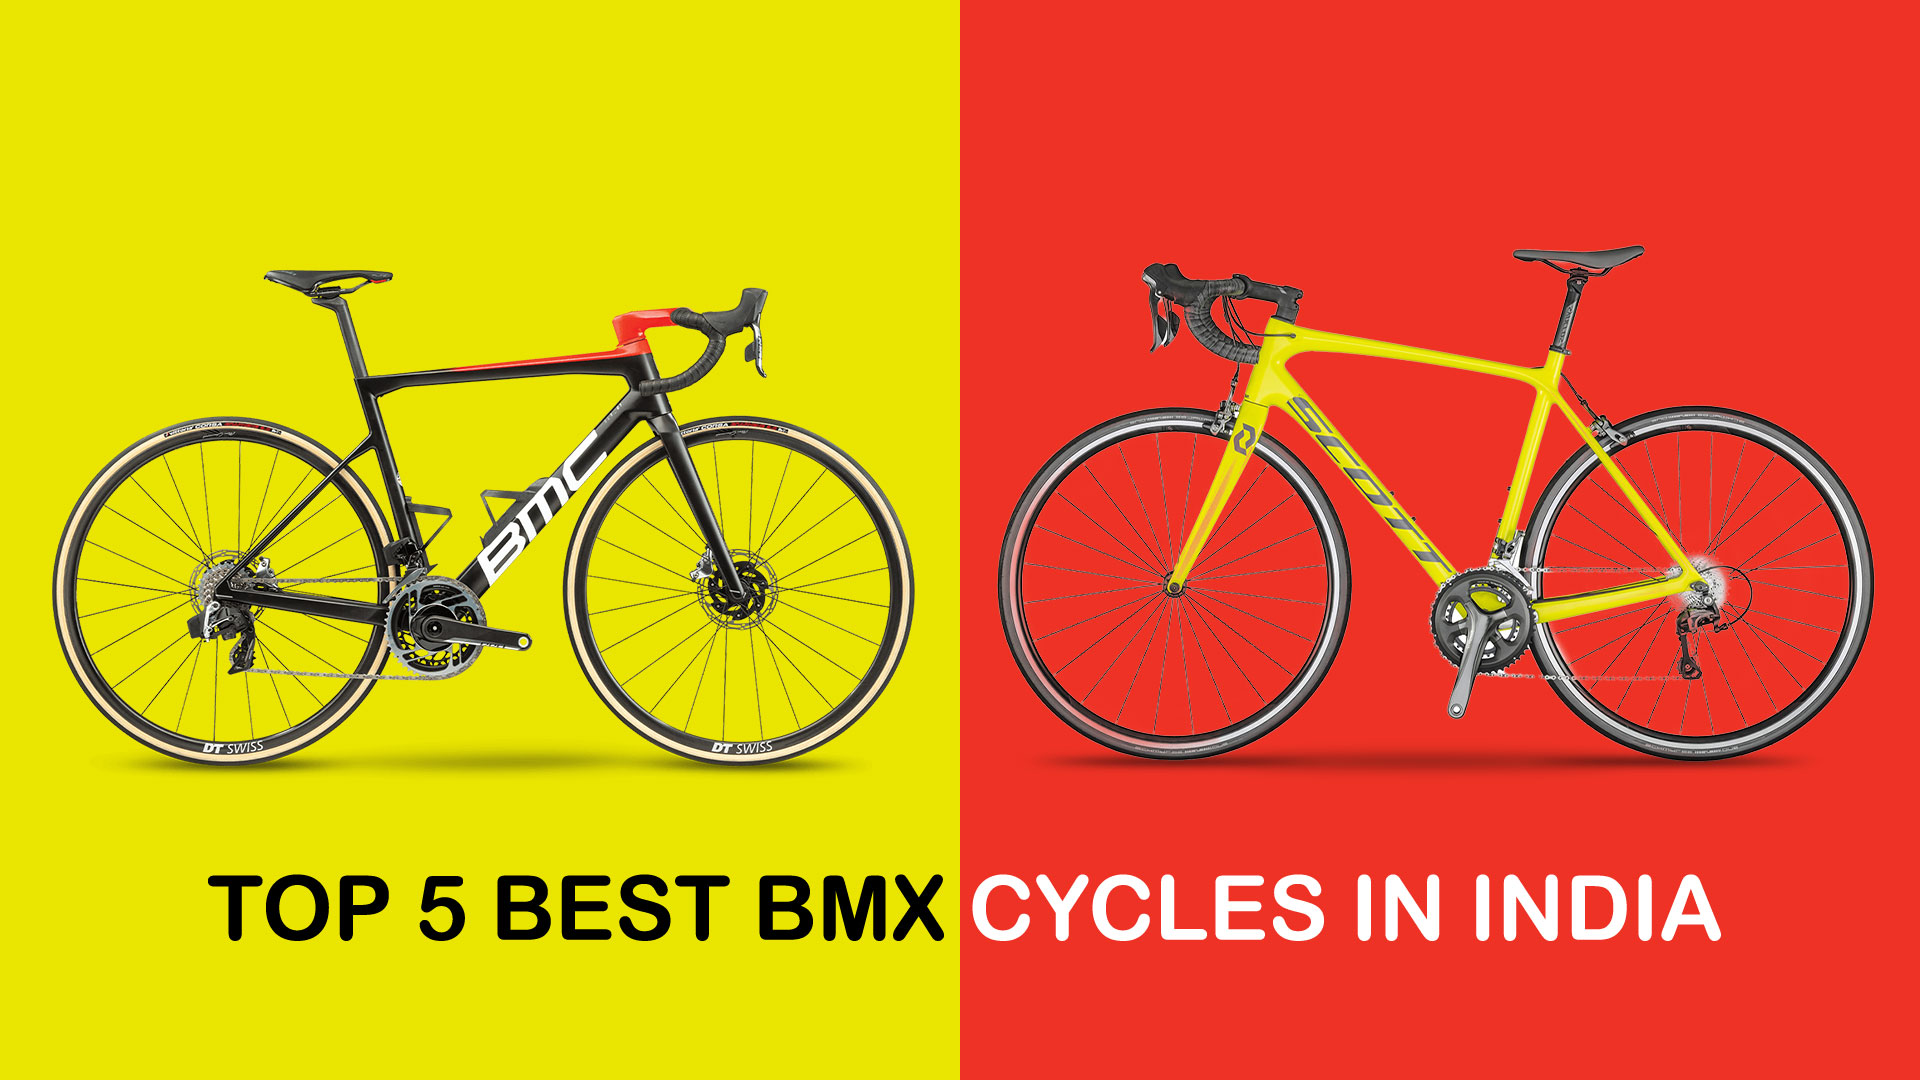 BMX CYCLES